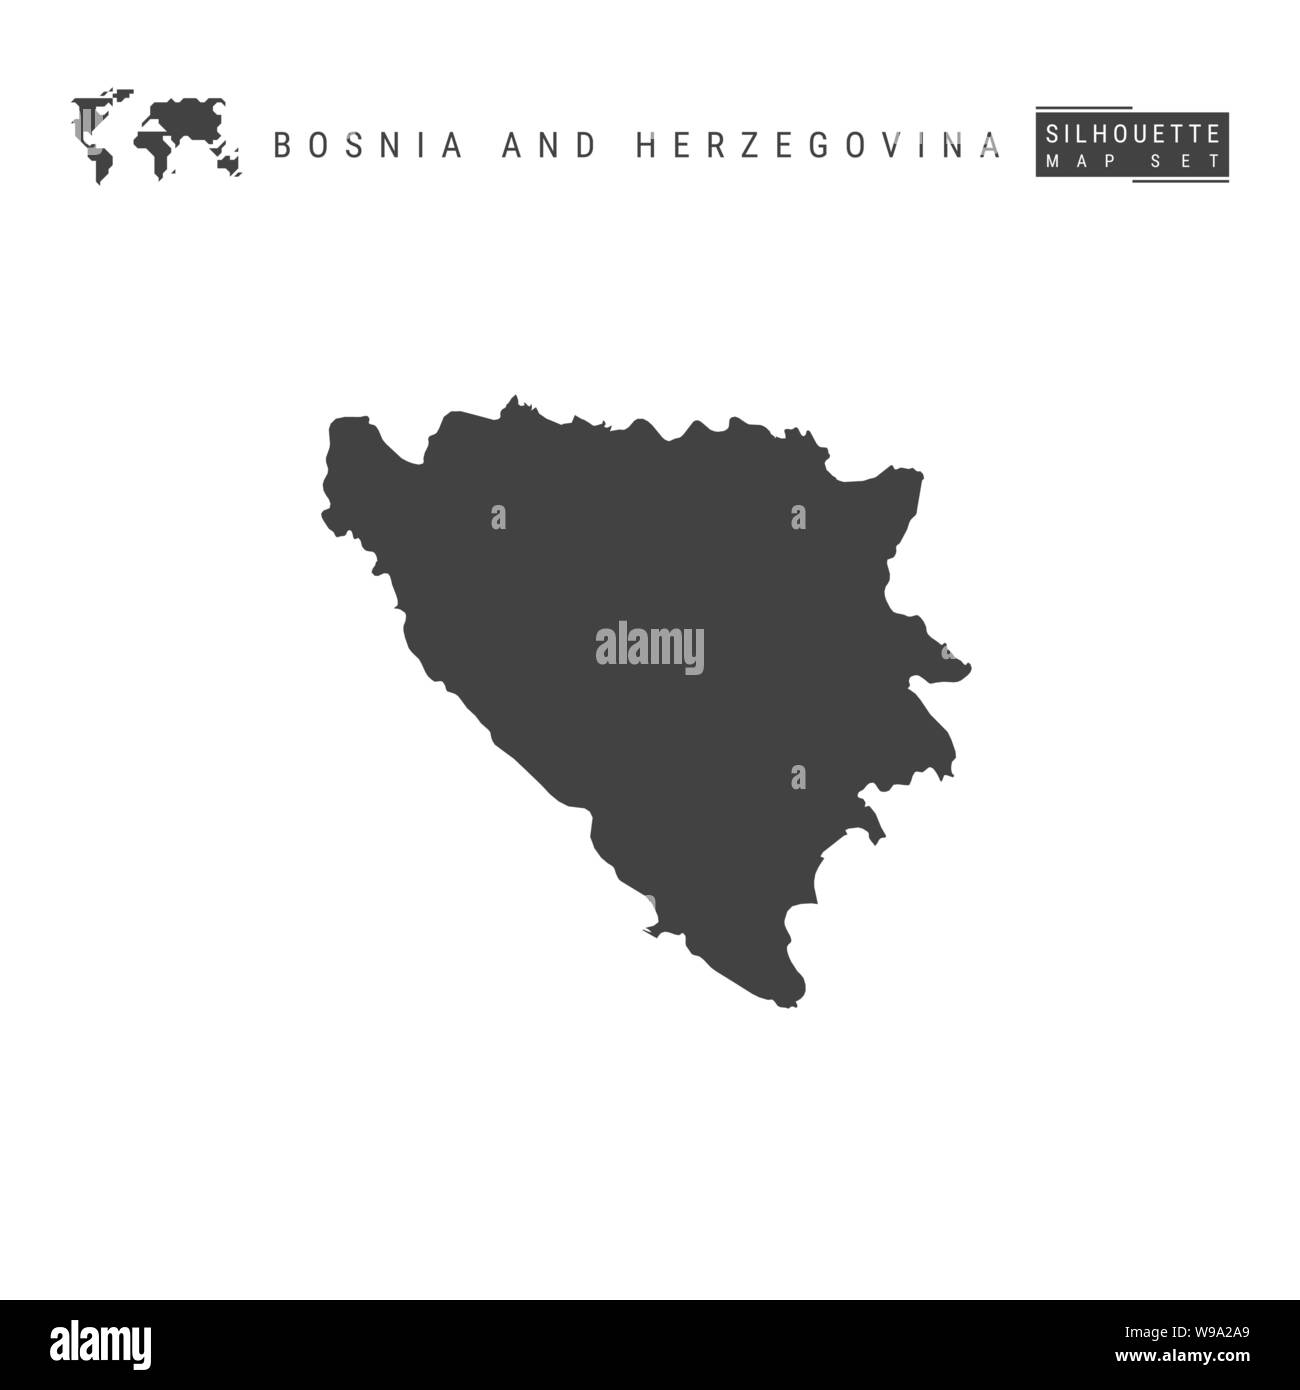 Bosnia and Herzegovina Blank Vector Map Isolated on White Background. High-Detailed Black Silhouette Map of Bosnia and Herzegovina. Stock Vector